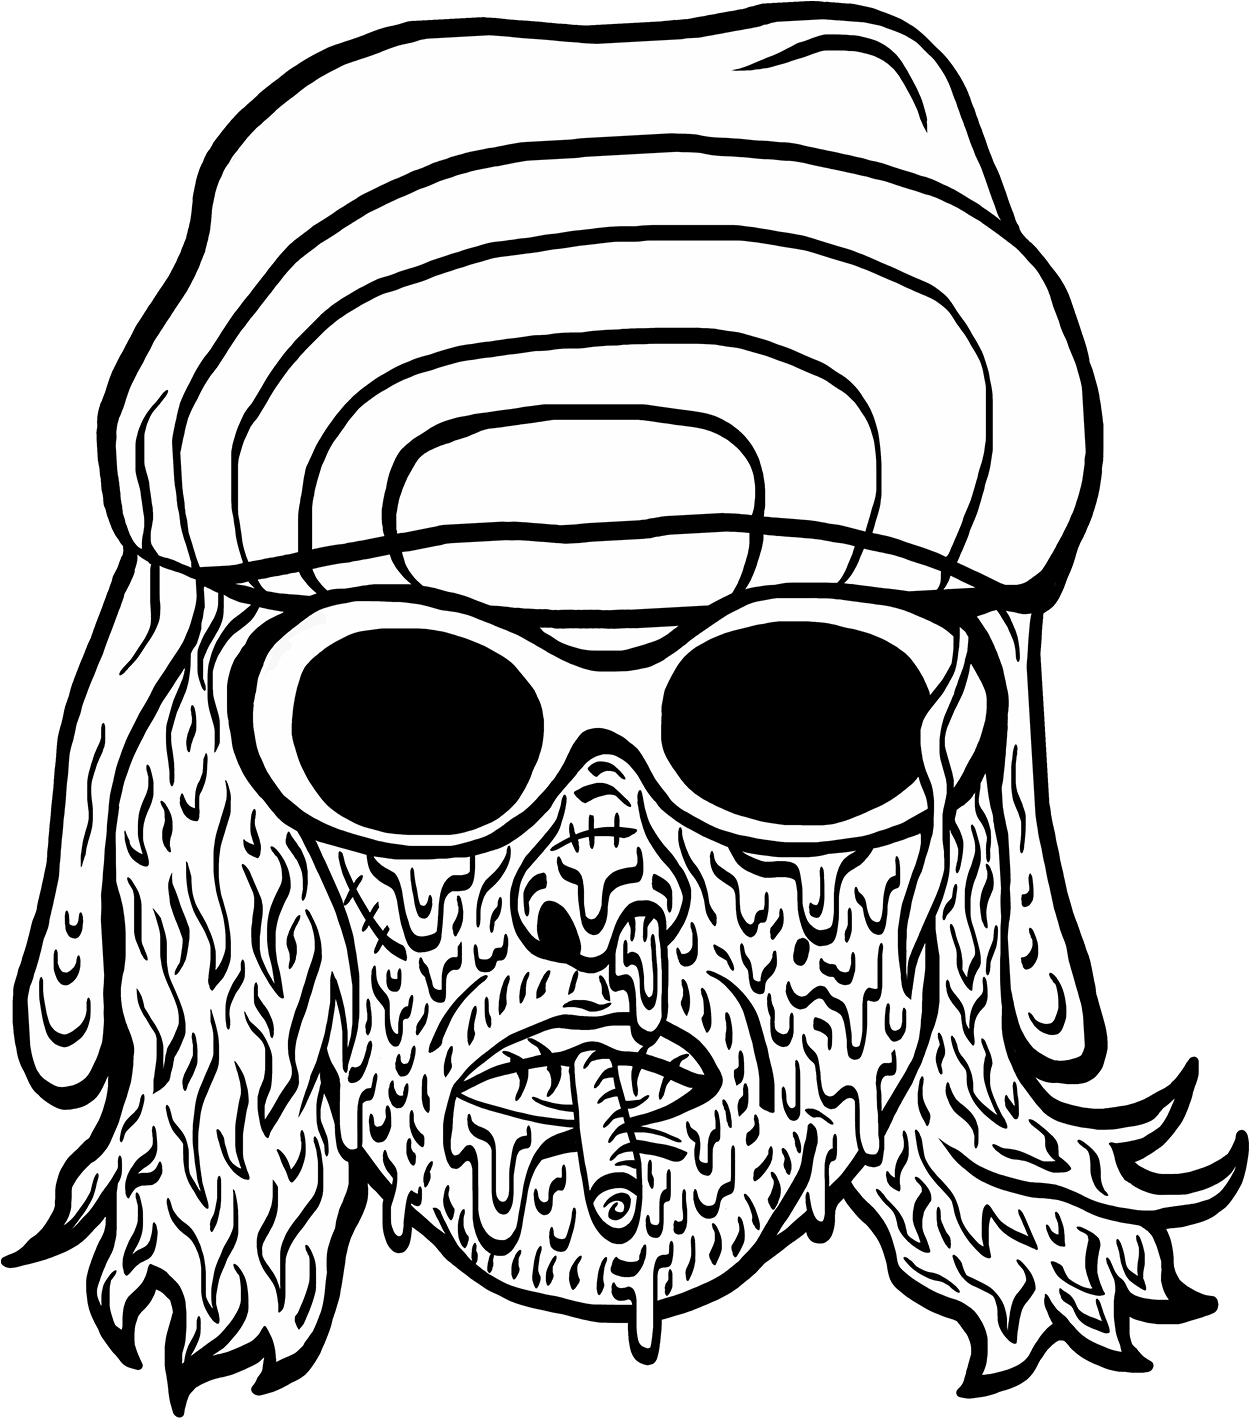 Download Black Label Cobain - Kurt Cobain Style Line Art PNG Image with ...